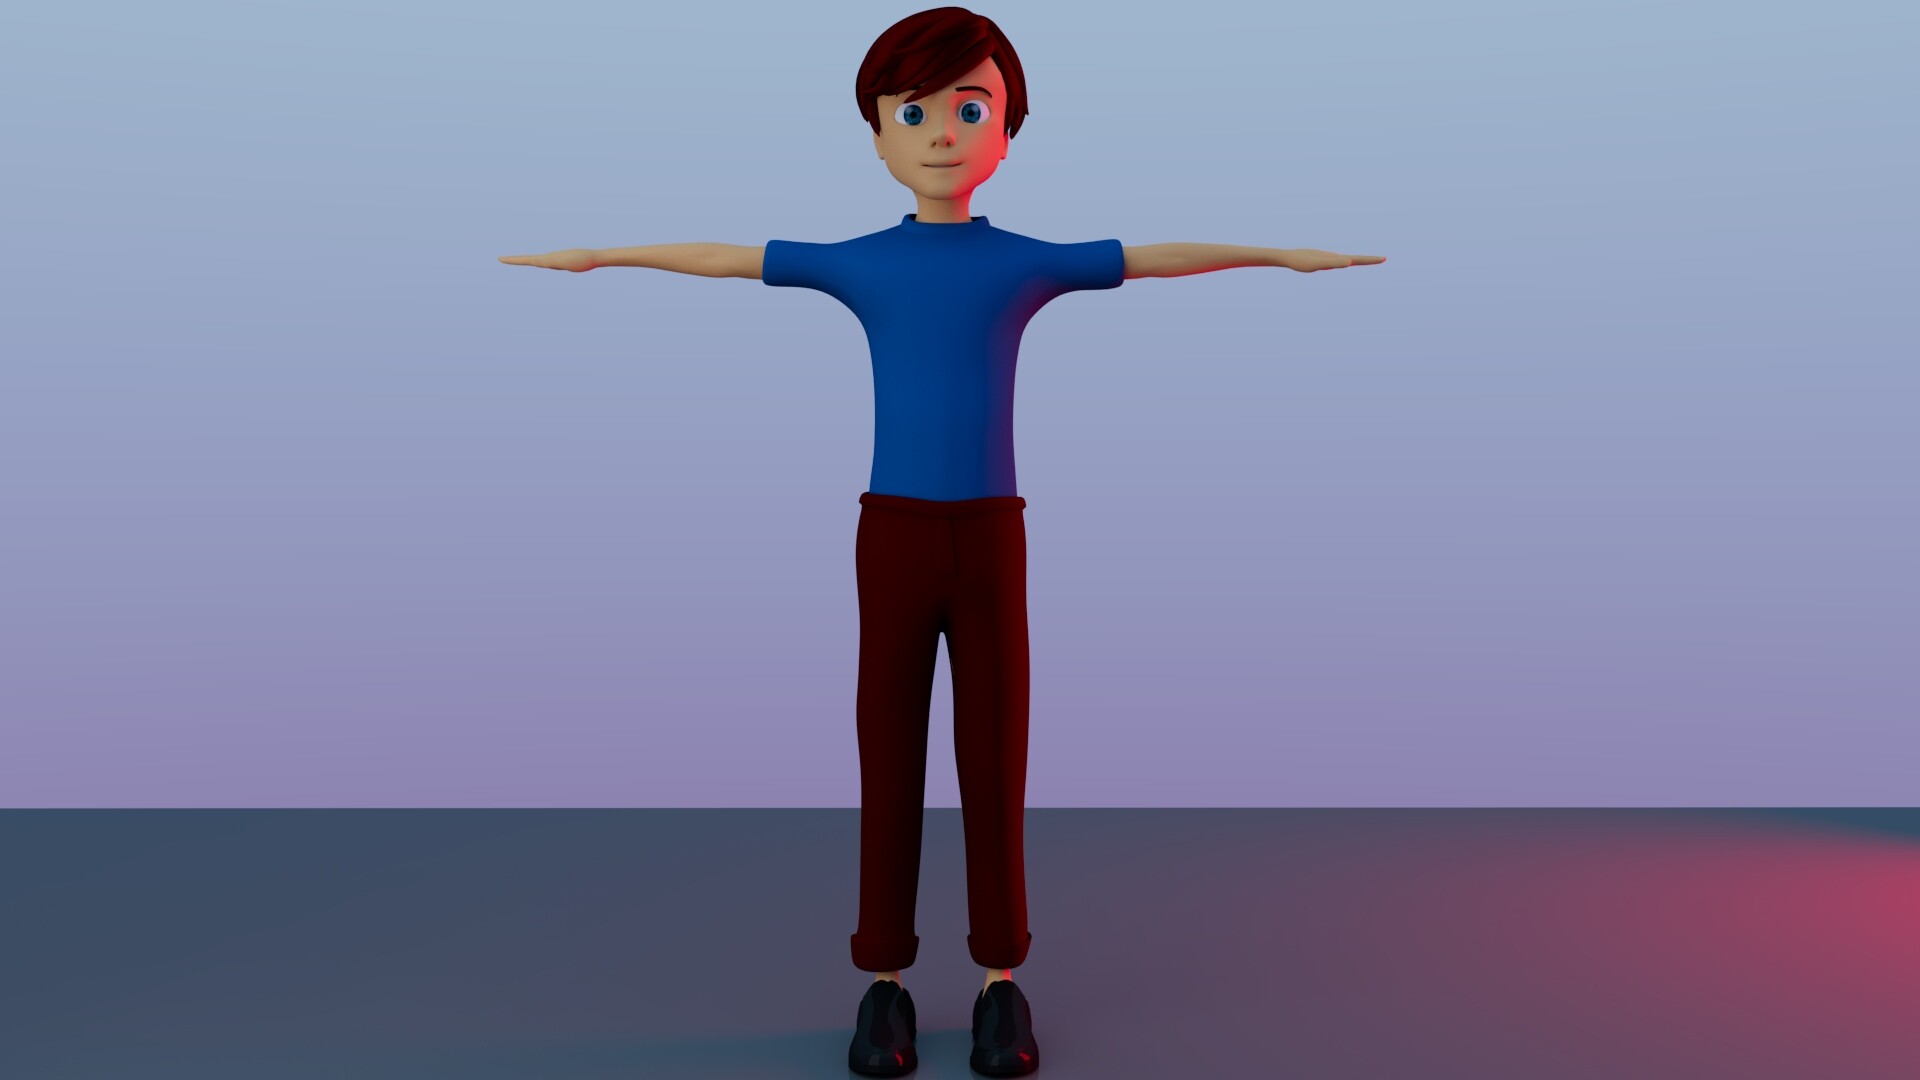 ArtStation - 3D Cartoon Boy Character